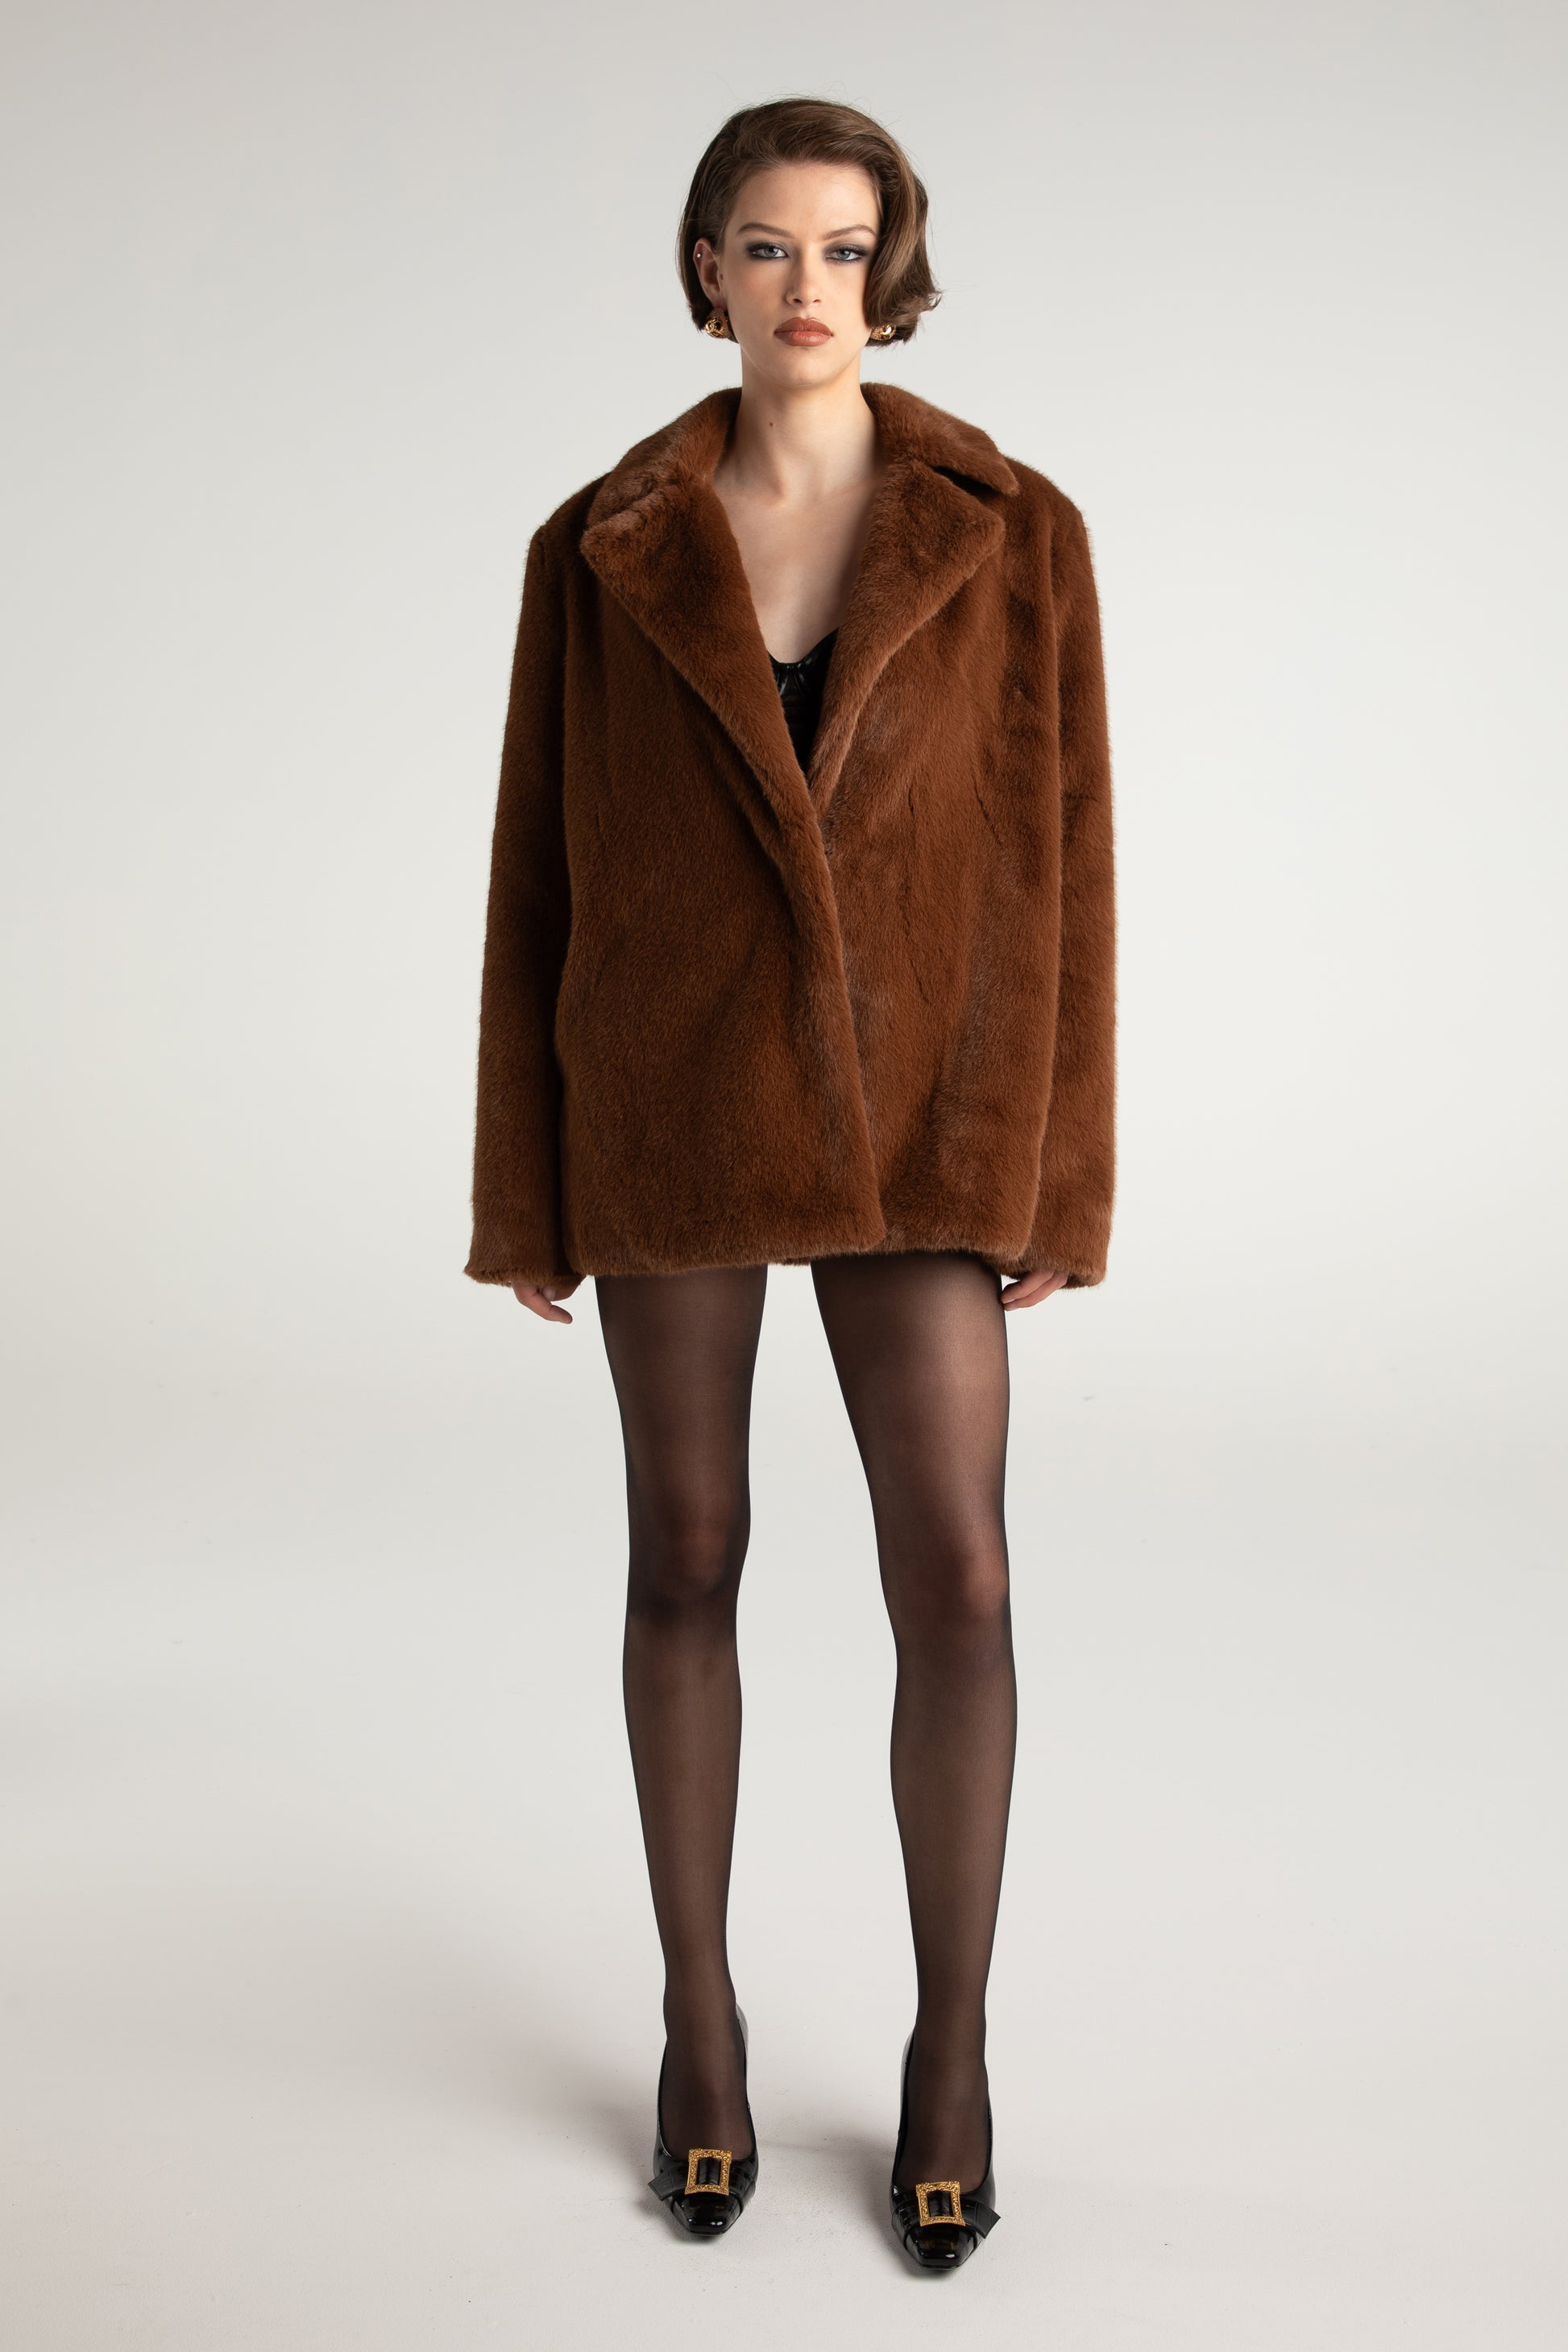 Jacqueline Phoebe Nana – Jacket Fur (Brown)